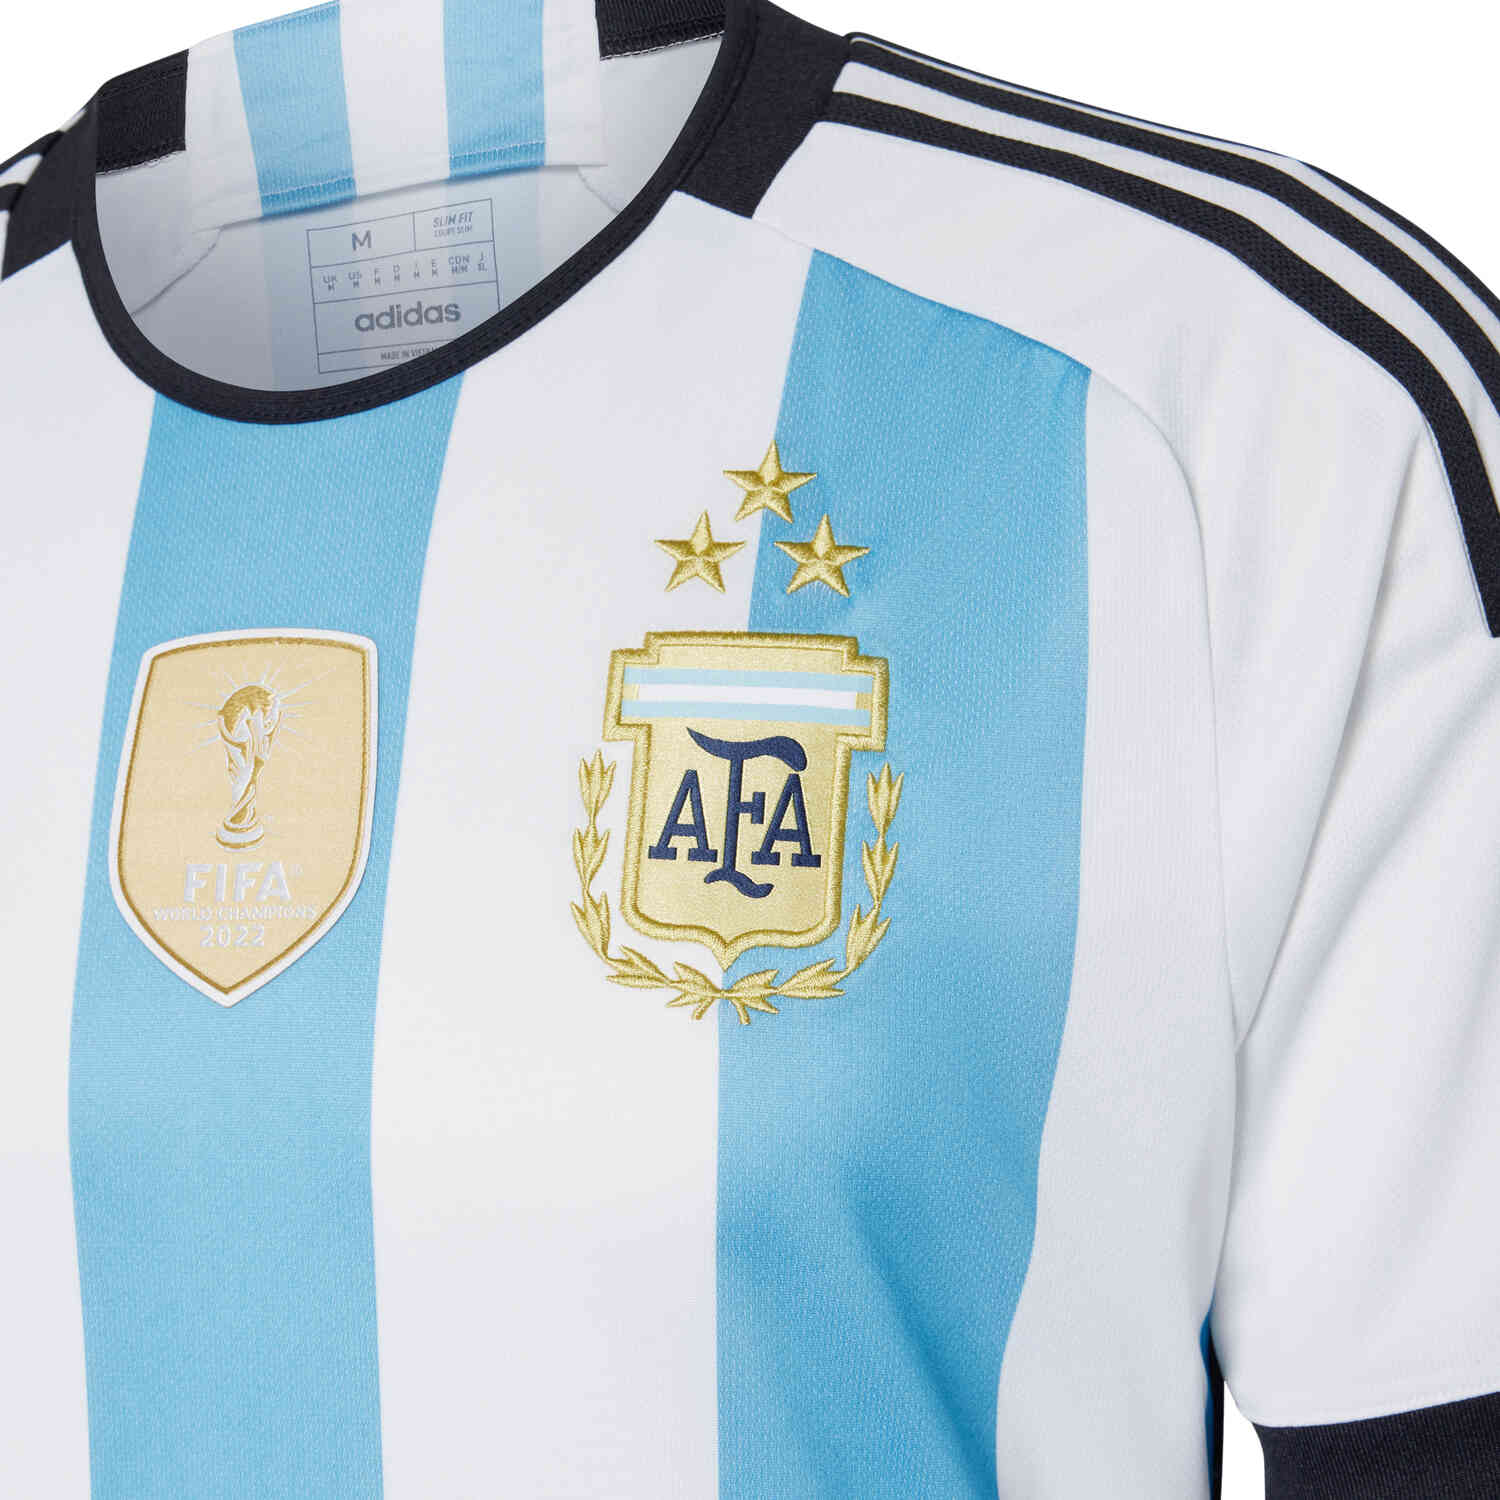 argentina jersey three star